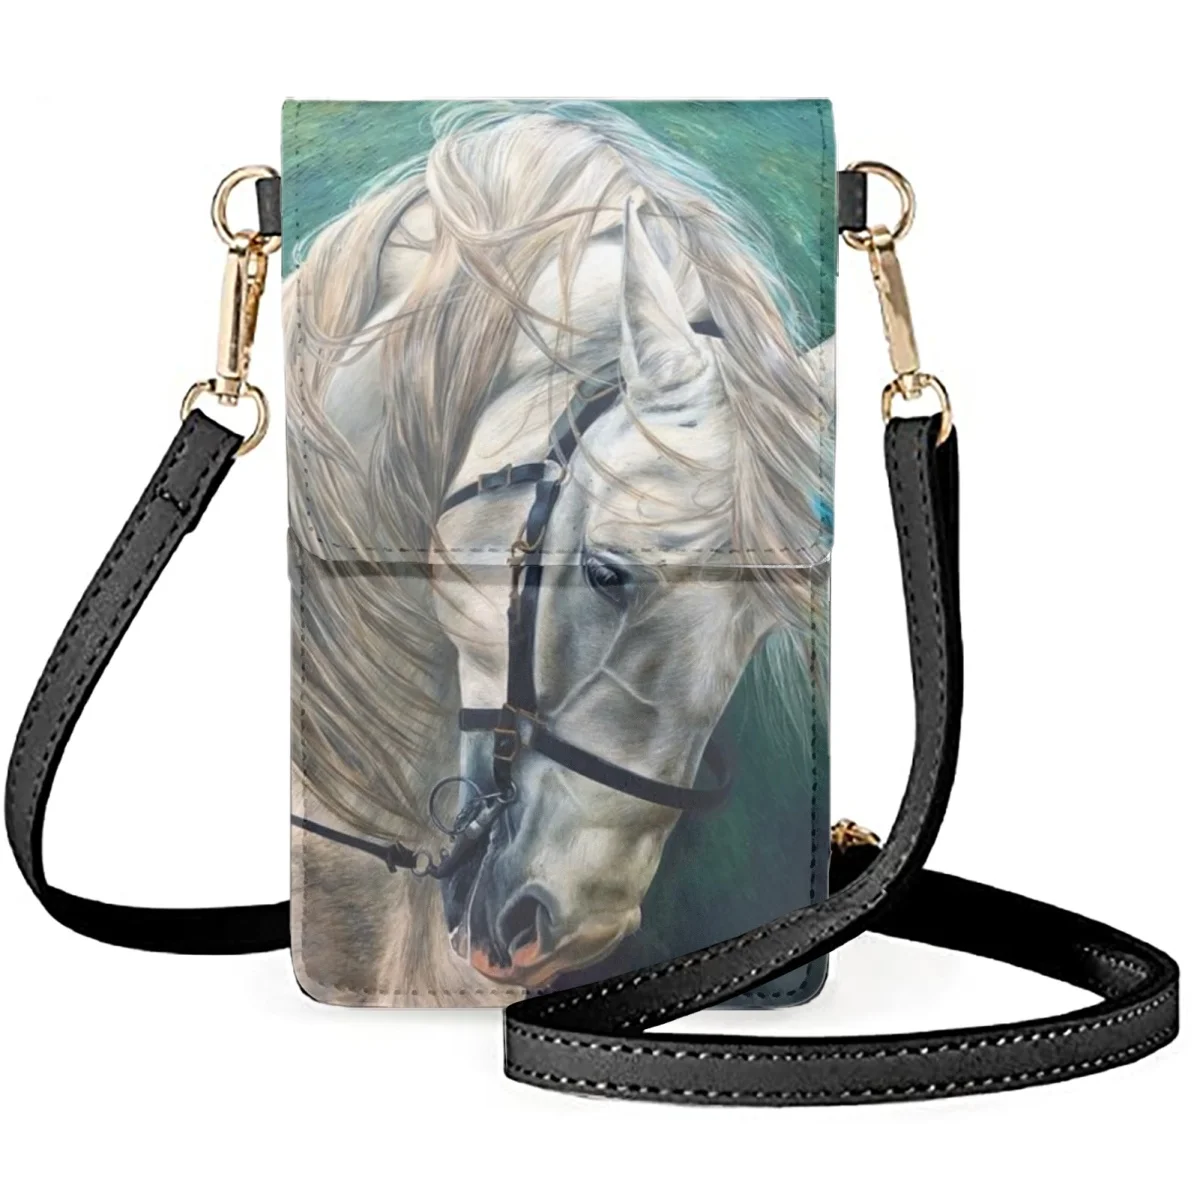 FORUDESIGNS Clamshell Design Shoulder Bags 3D Printed Horse Messenger Un... - $32.10